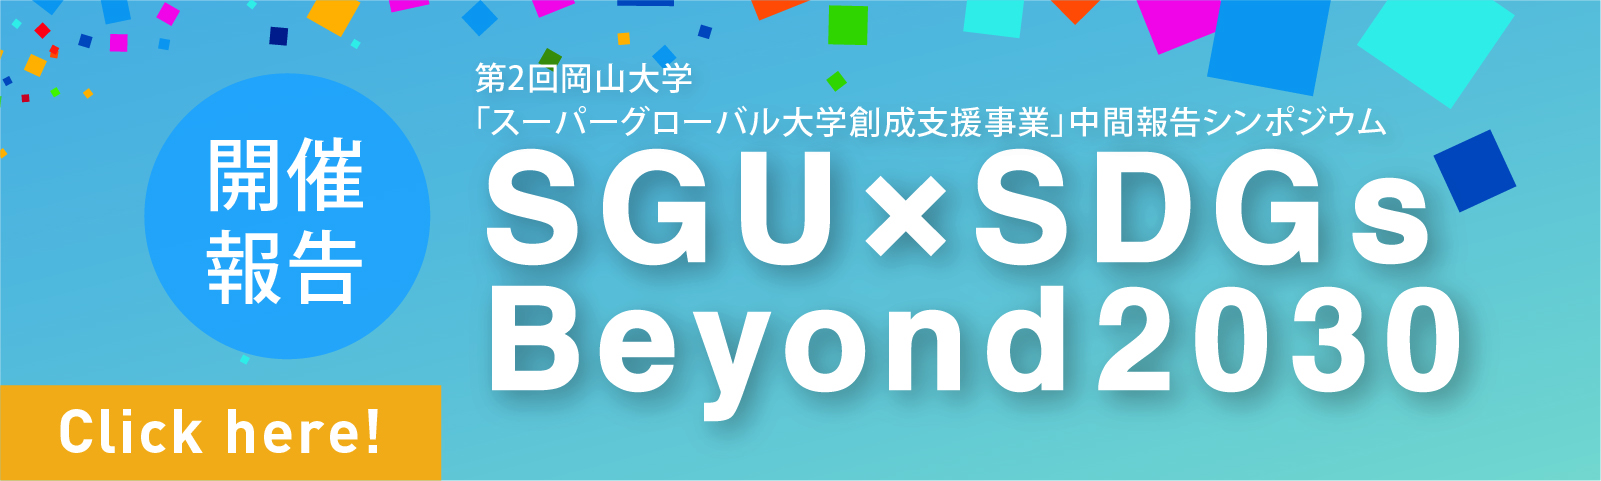 SGU×SDGs Beyond2030